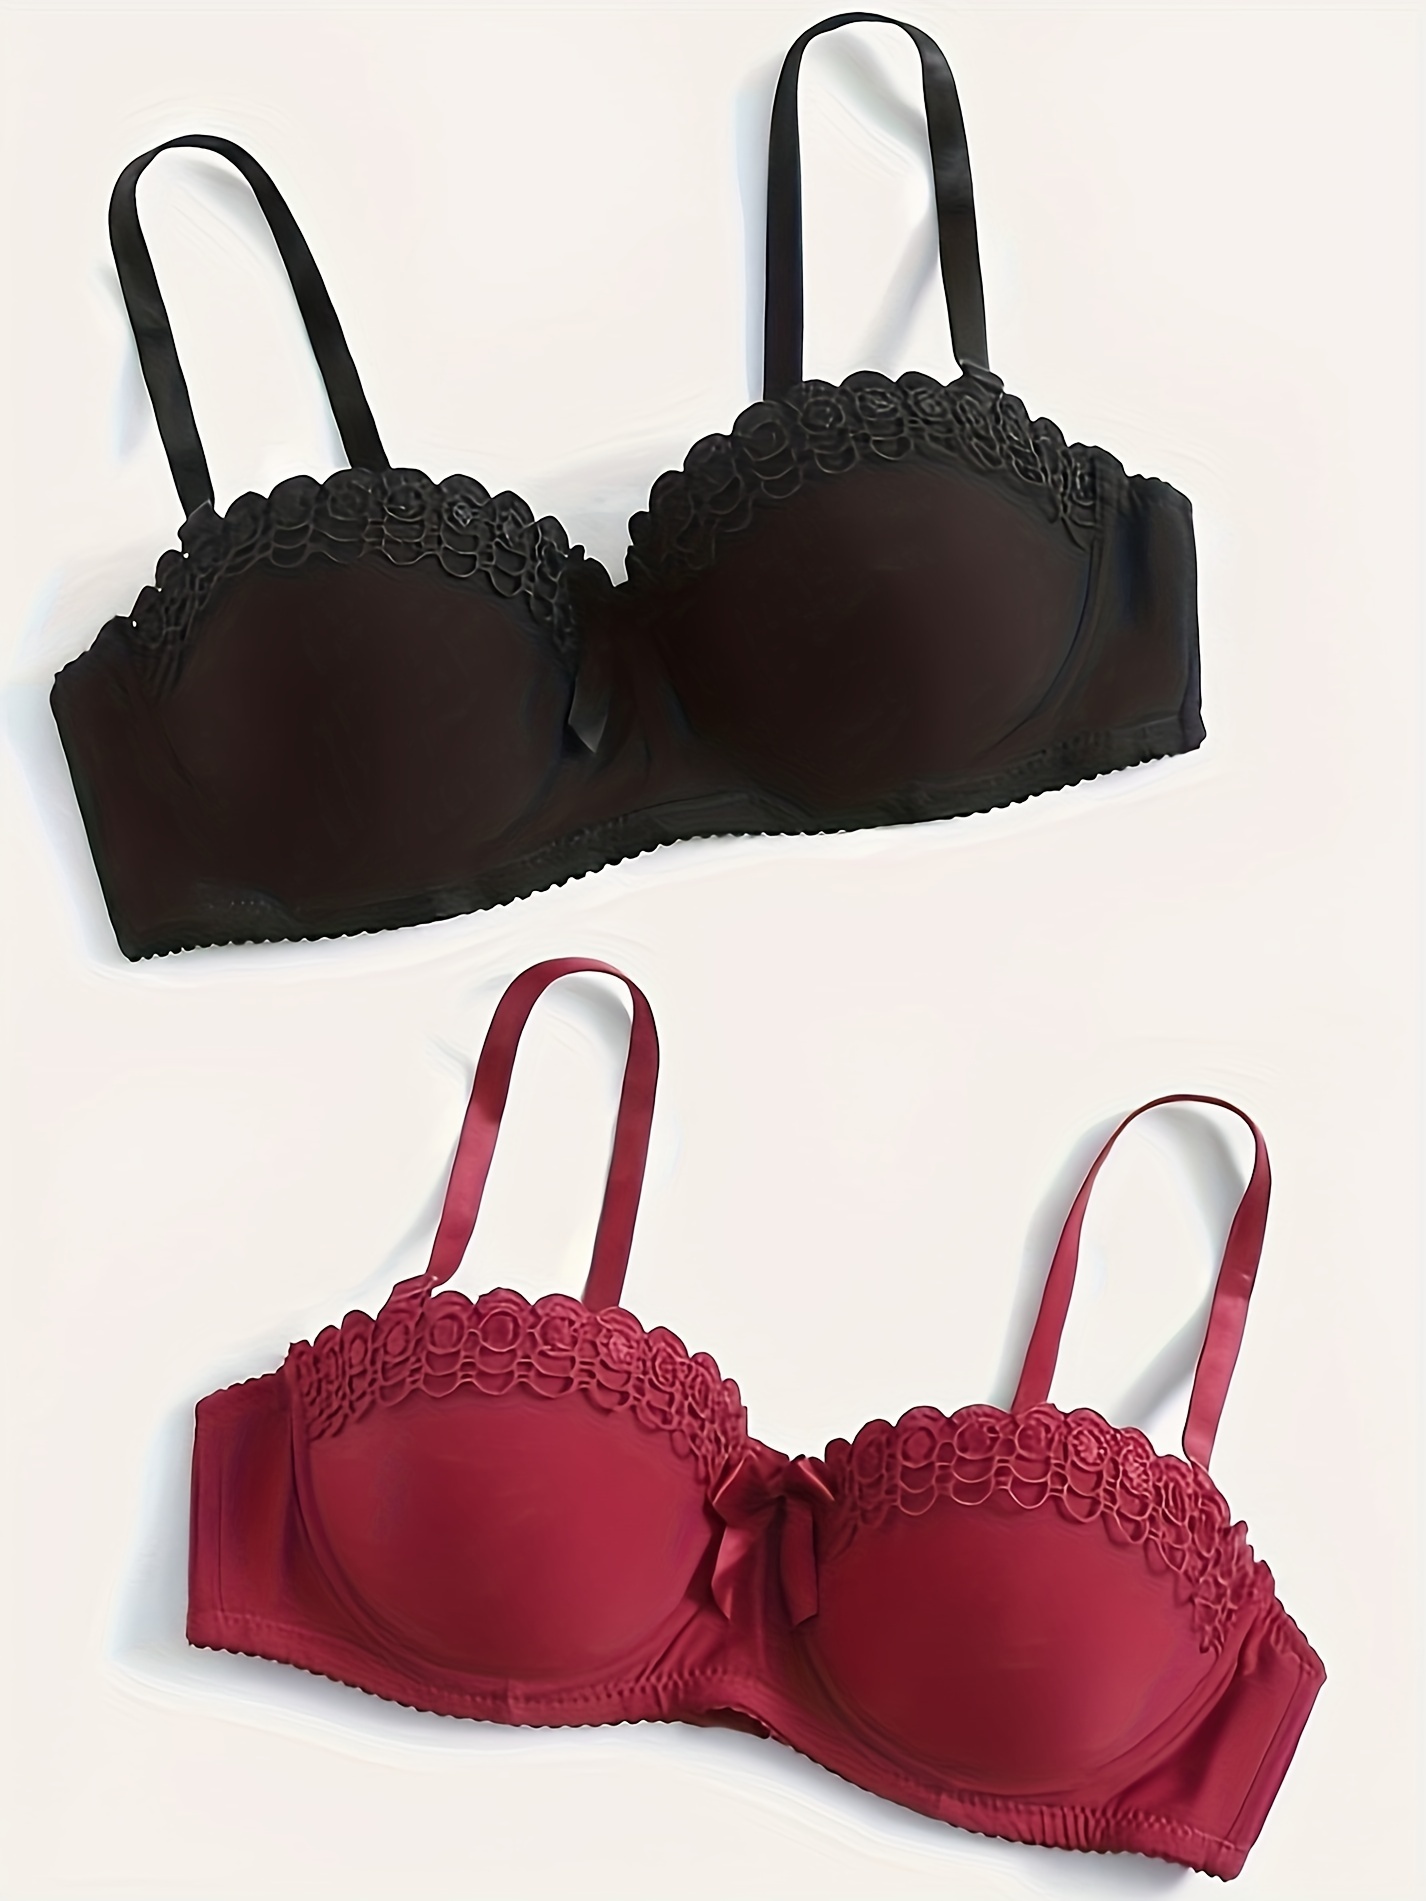 3pcs Contrast Lace Balconette Bras, Push Up Anti-sagging Everyday Bra,  Women's Lingerie & Underwear